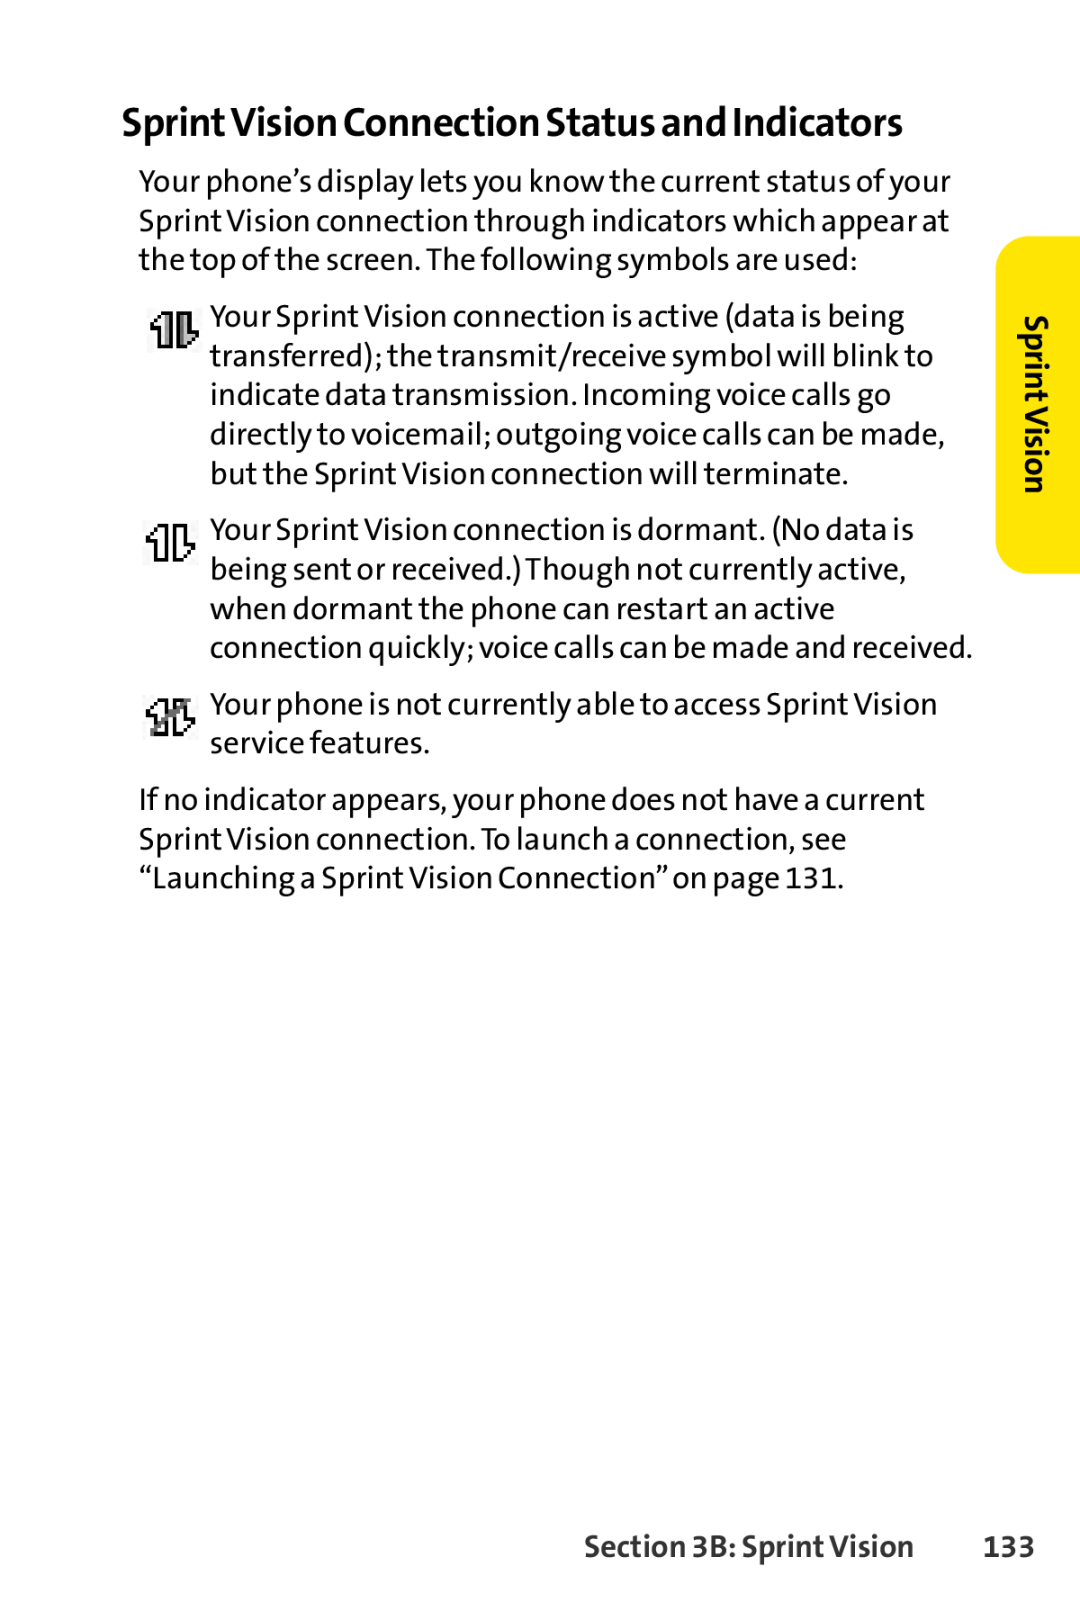 Sprint Nextel LX160 manual SprintVision Connection Status and Indicators, Sprint Vision 